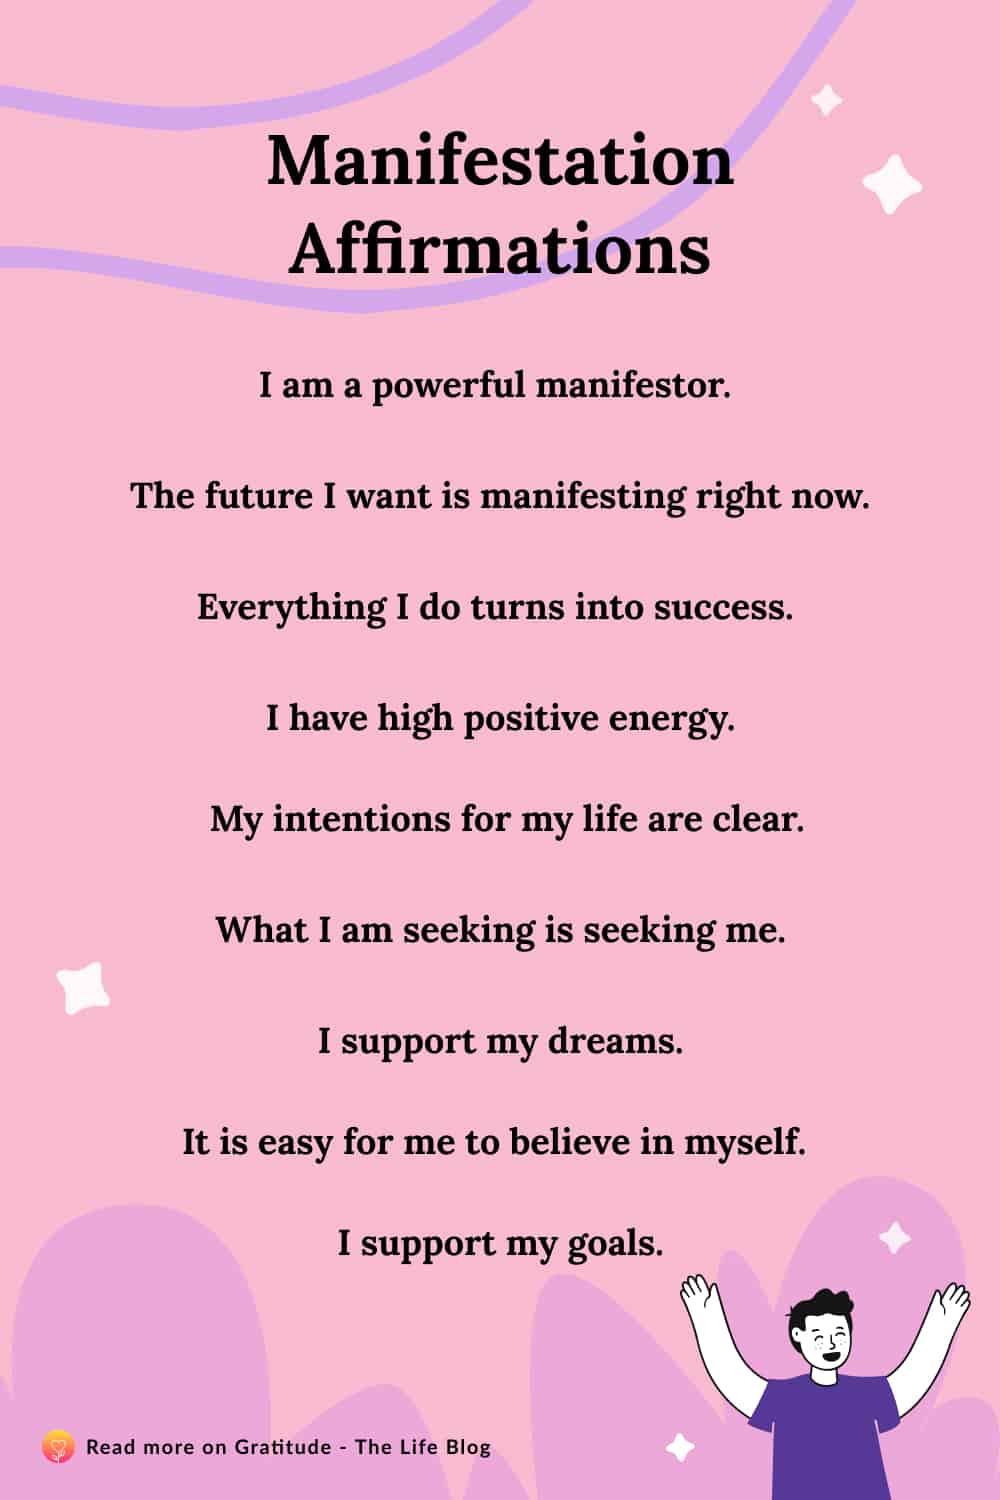 How do you write manifestation affirmations?